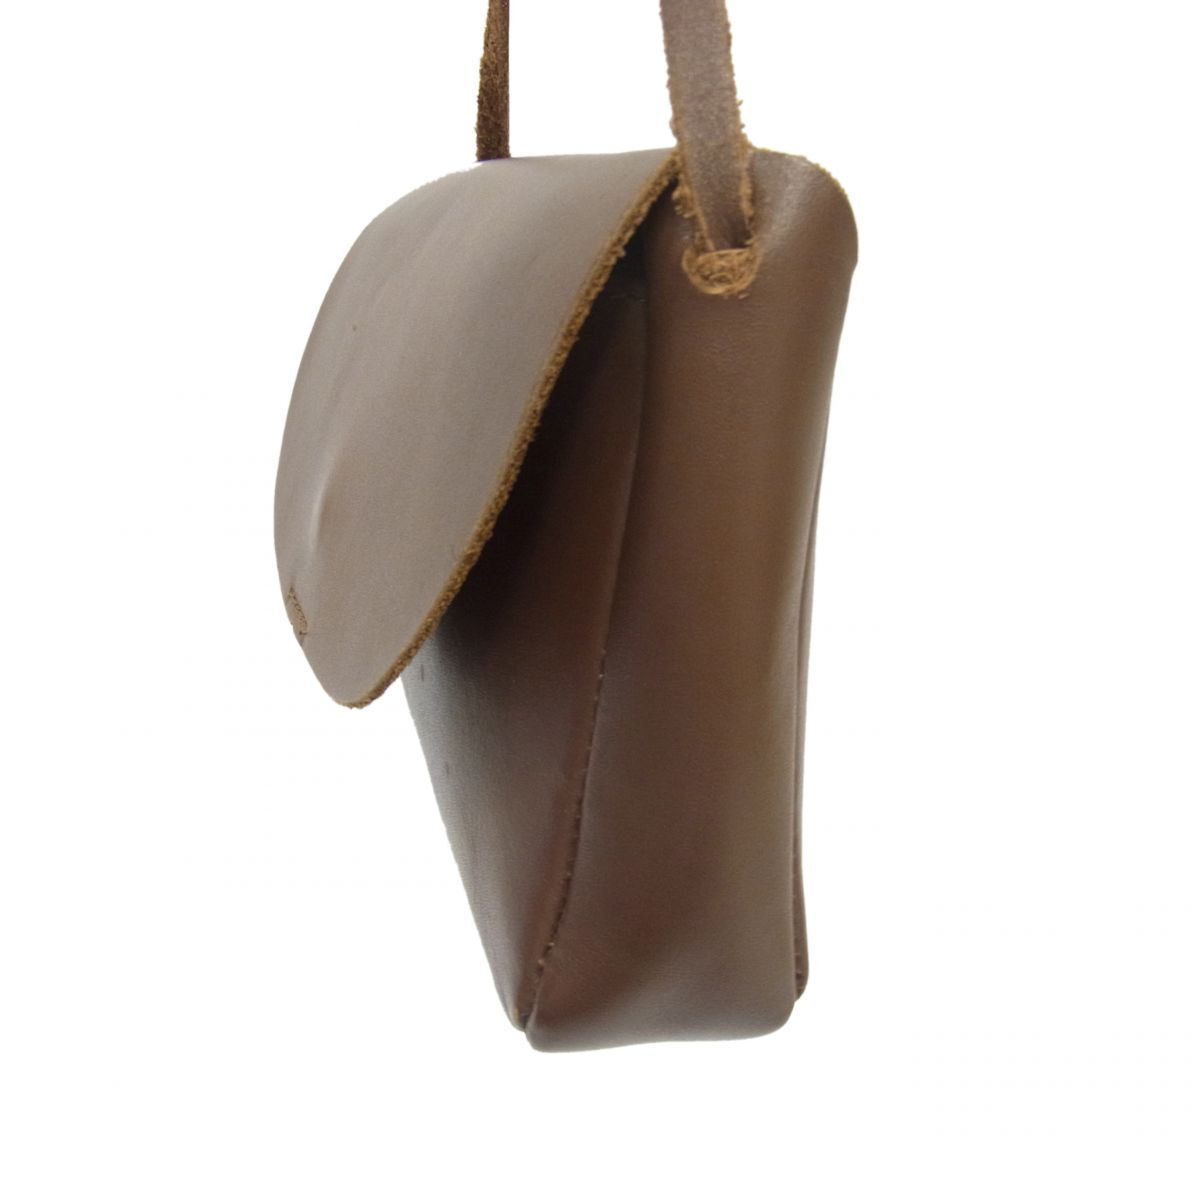  beautiful goods *Ampersand original leather shoulder bag pochette Anne pa Sand dark brown lady's 1 jpy start 